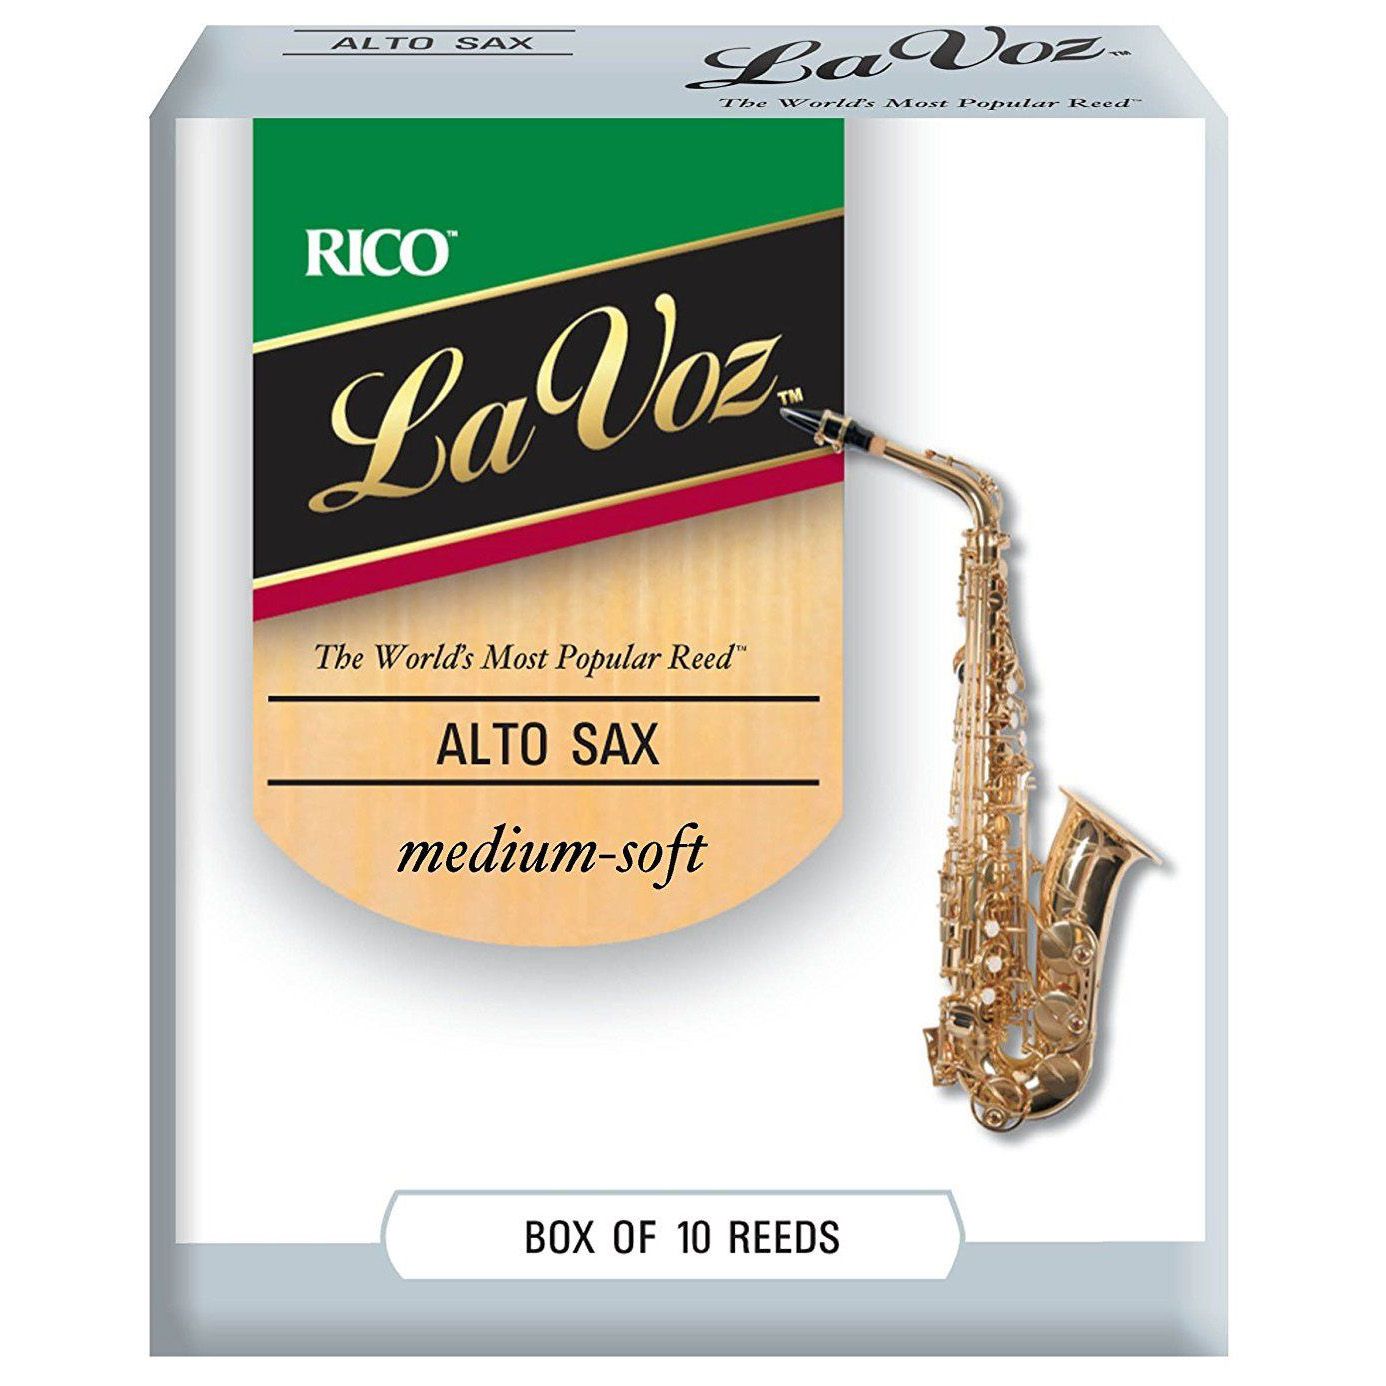 DAddario RJC10MS La Voz Alto Saxophone Reeds, MSFT, 10 BX, 10 Аксессуары для саксофонов